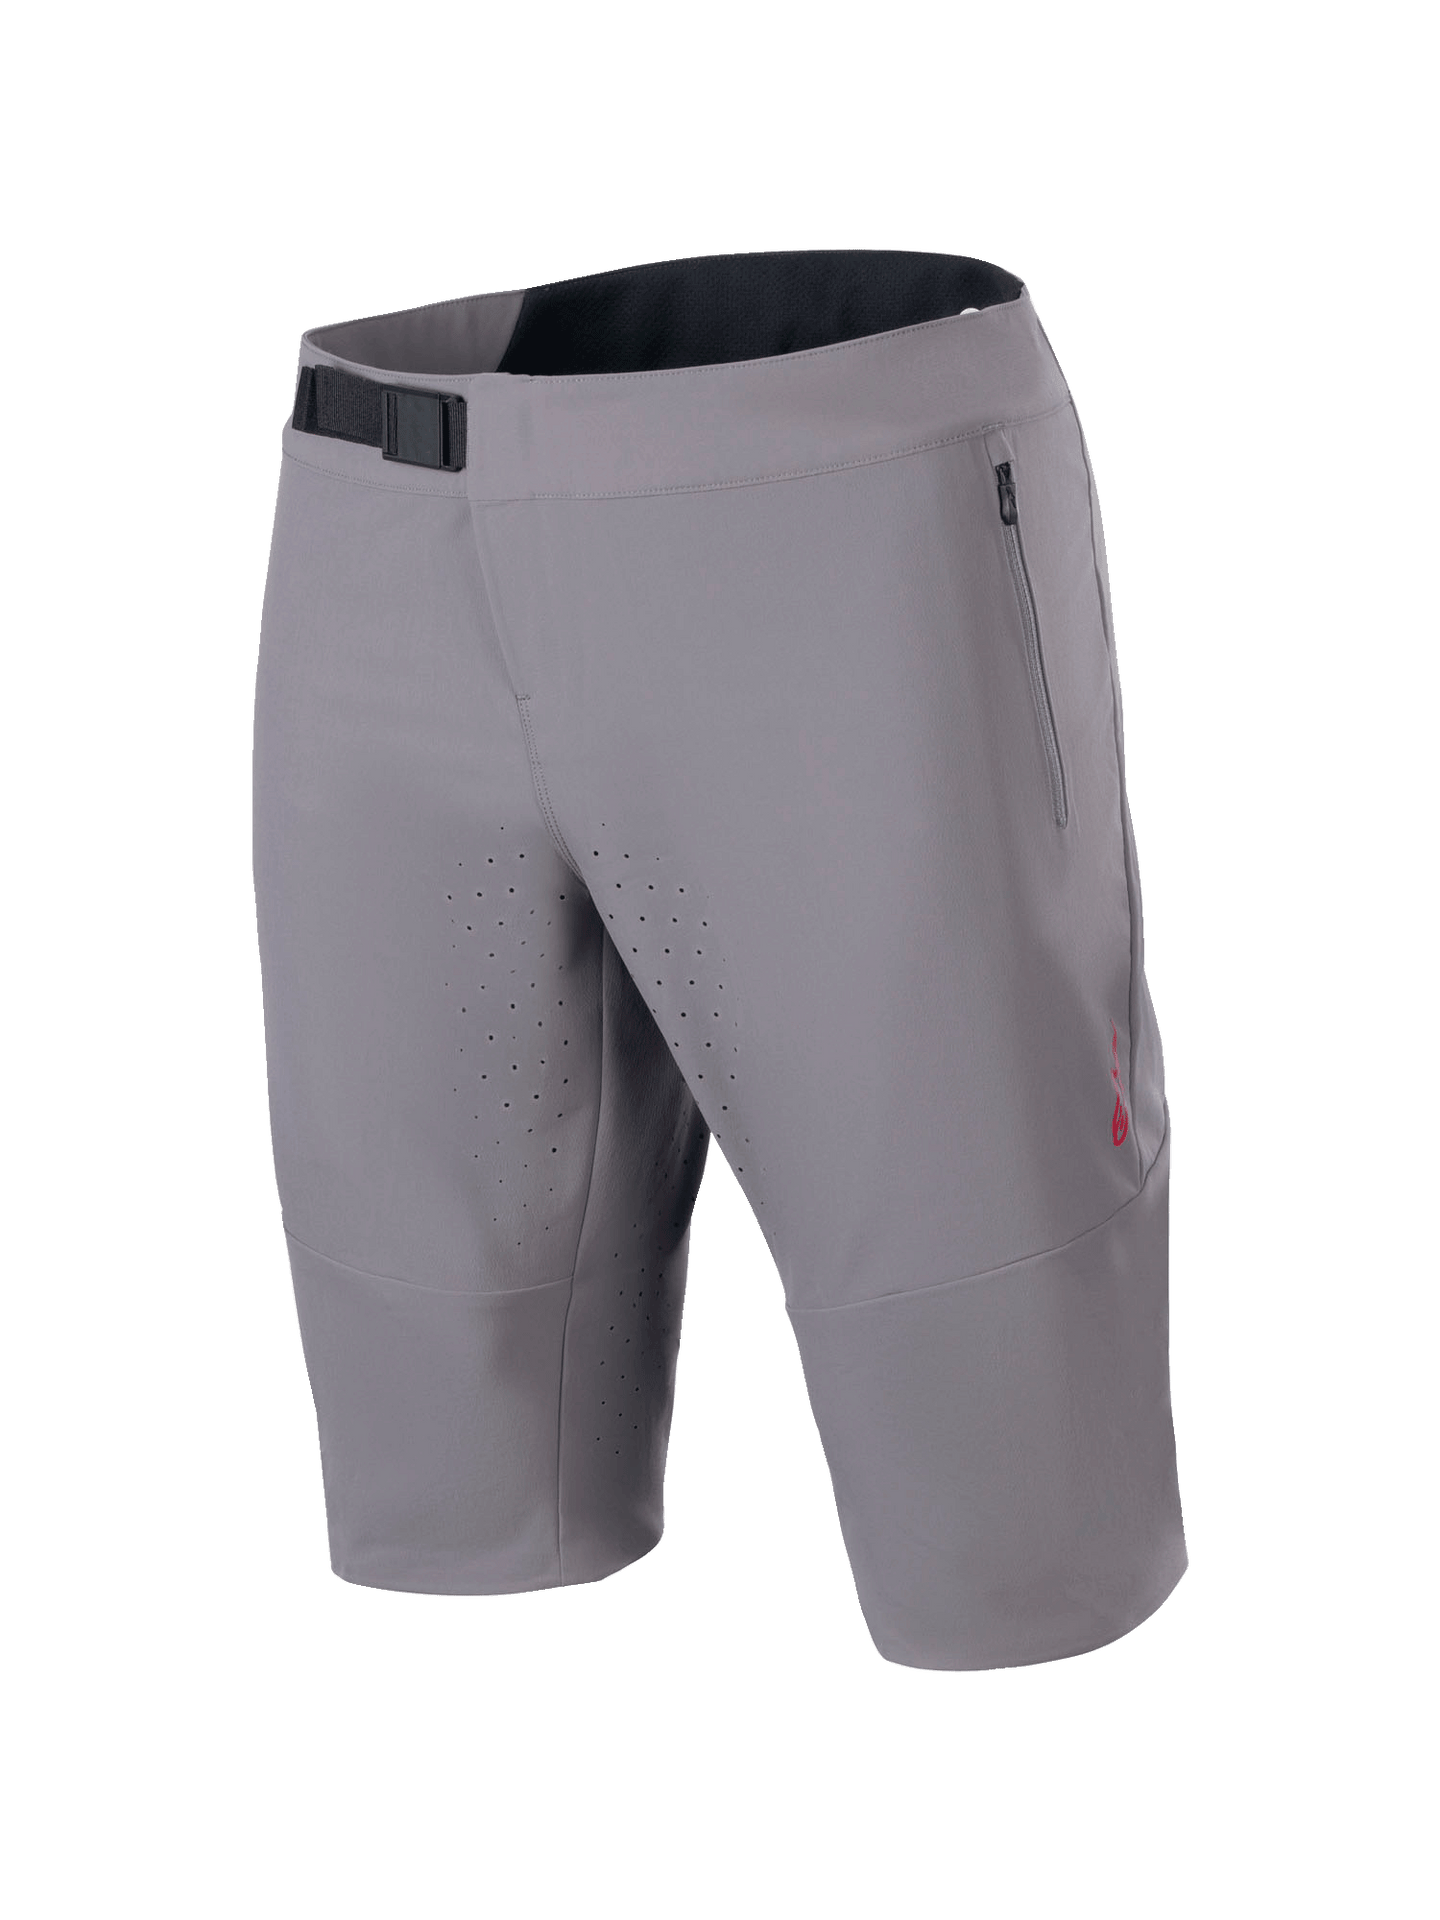 A-Aria Elite Pantalones cortos